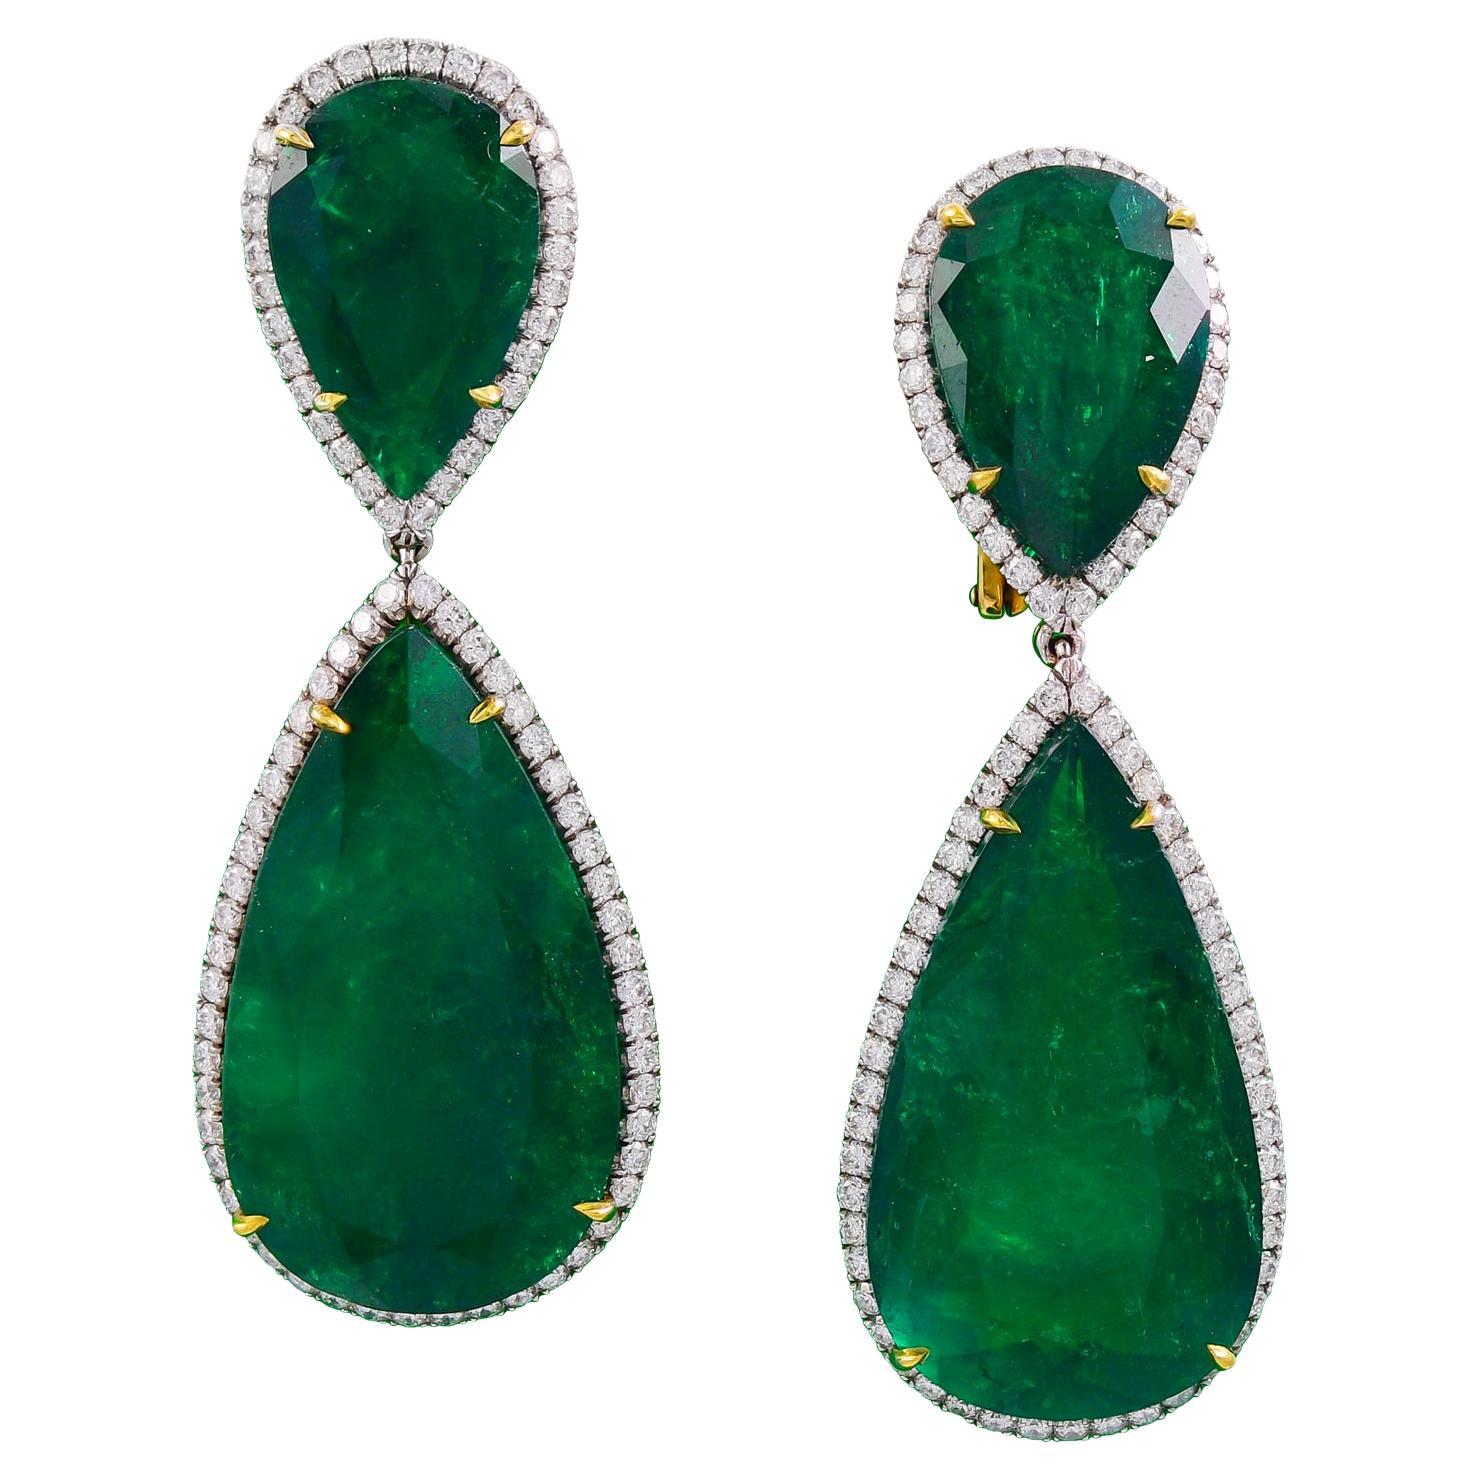 Spectra Fine Jewelry, Pendientes de gota de esmeralda colombiana certificada